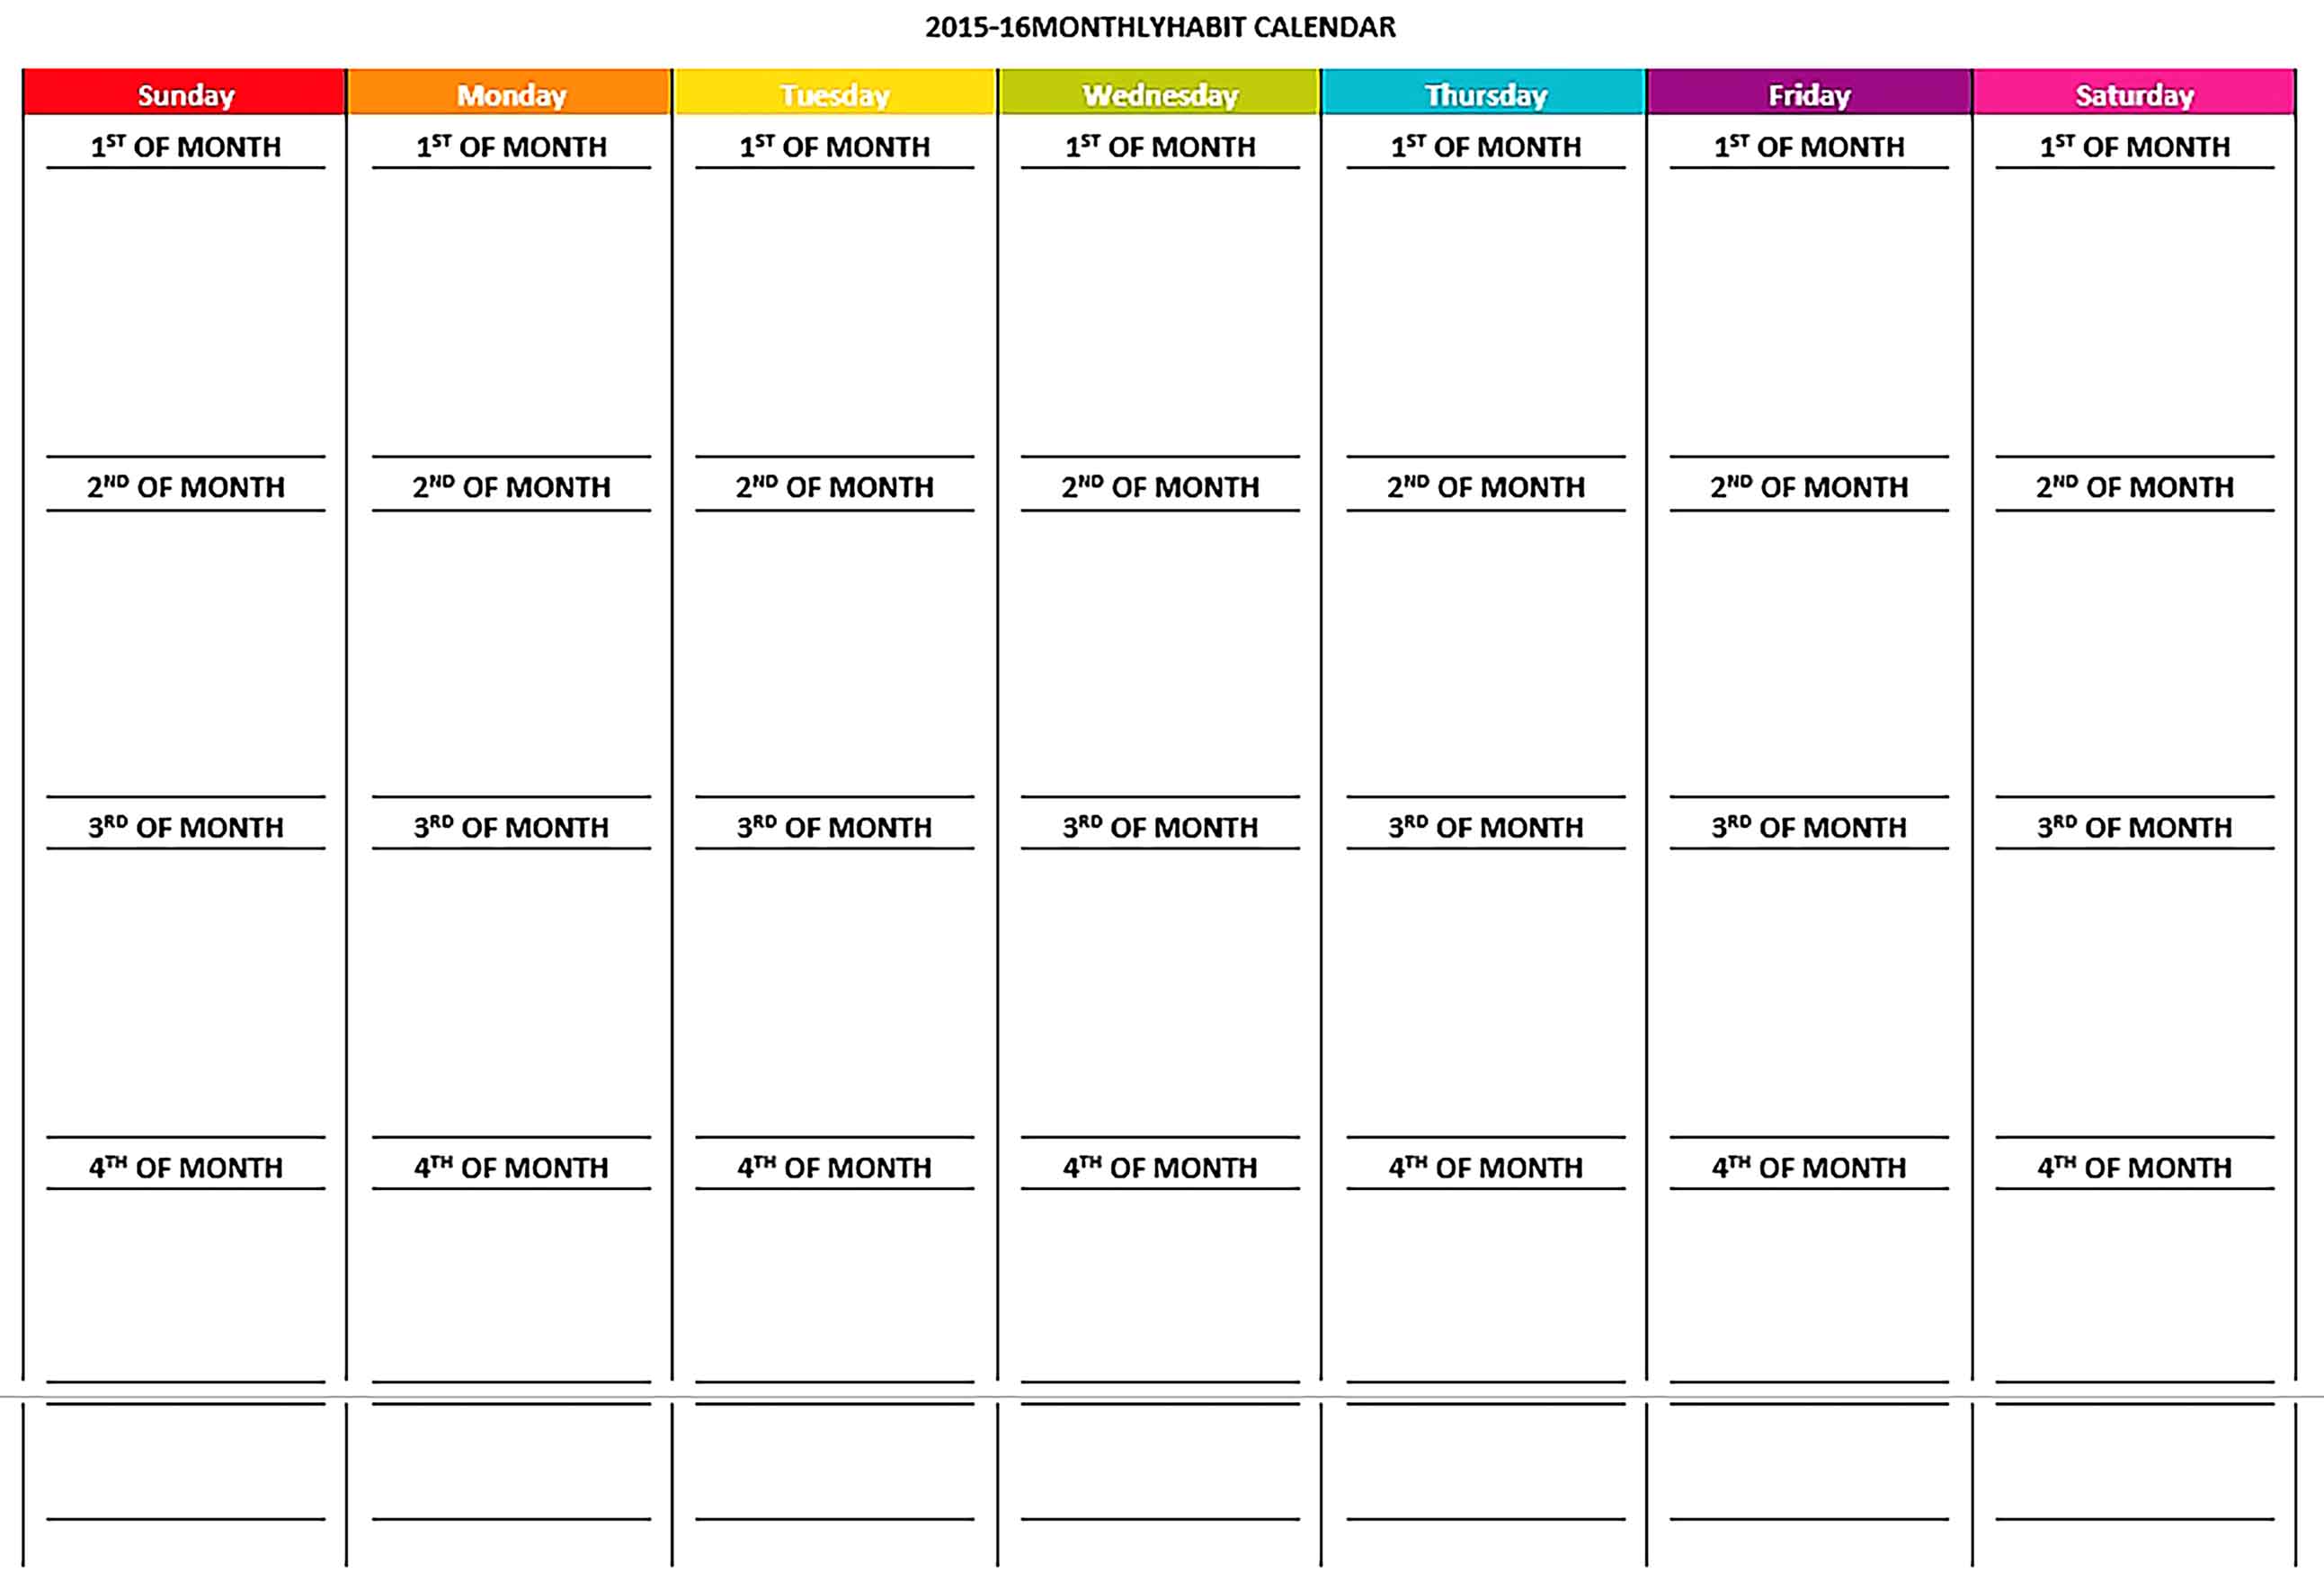 Template Monthly Habit Calendar Schedule Sample